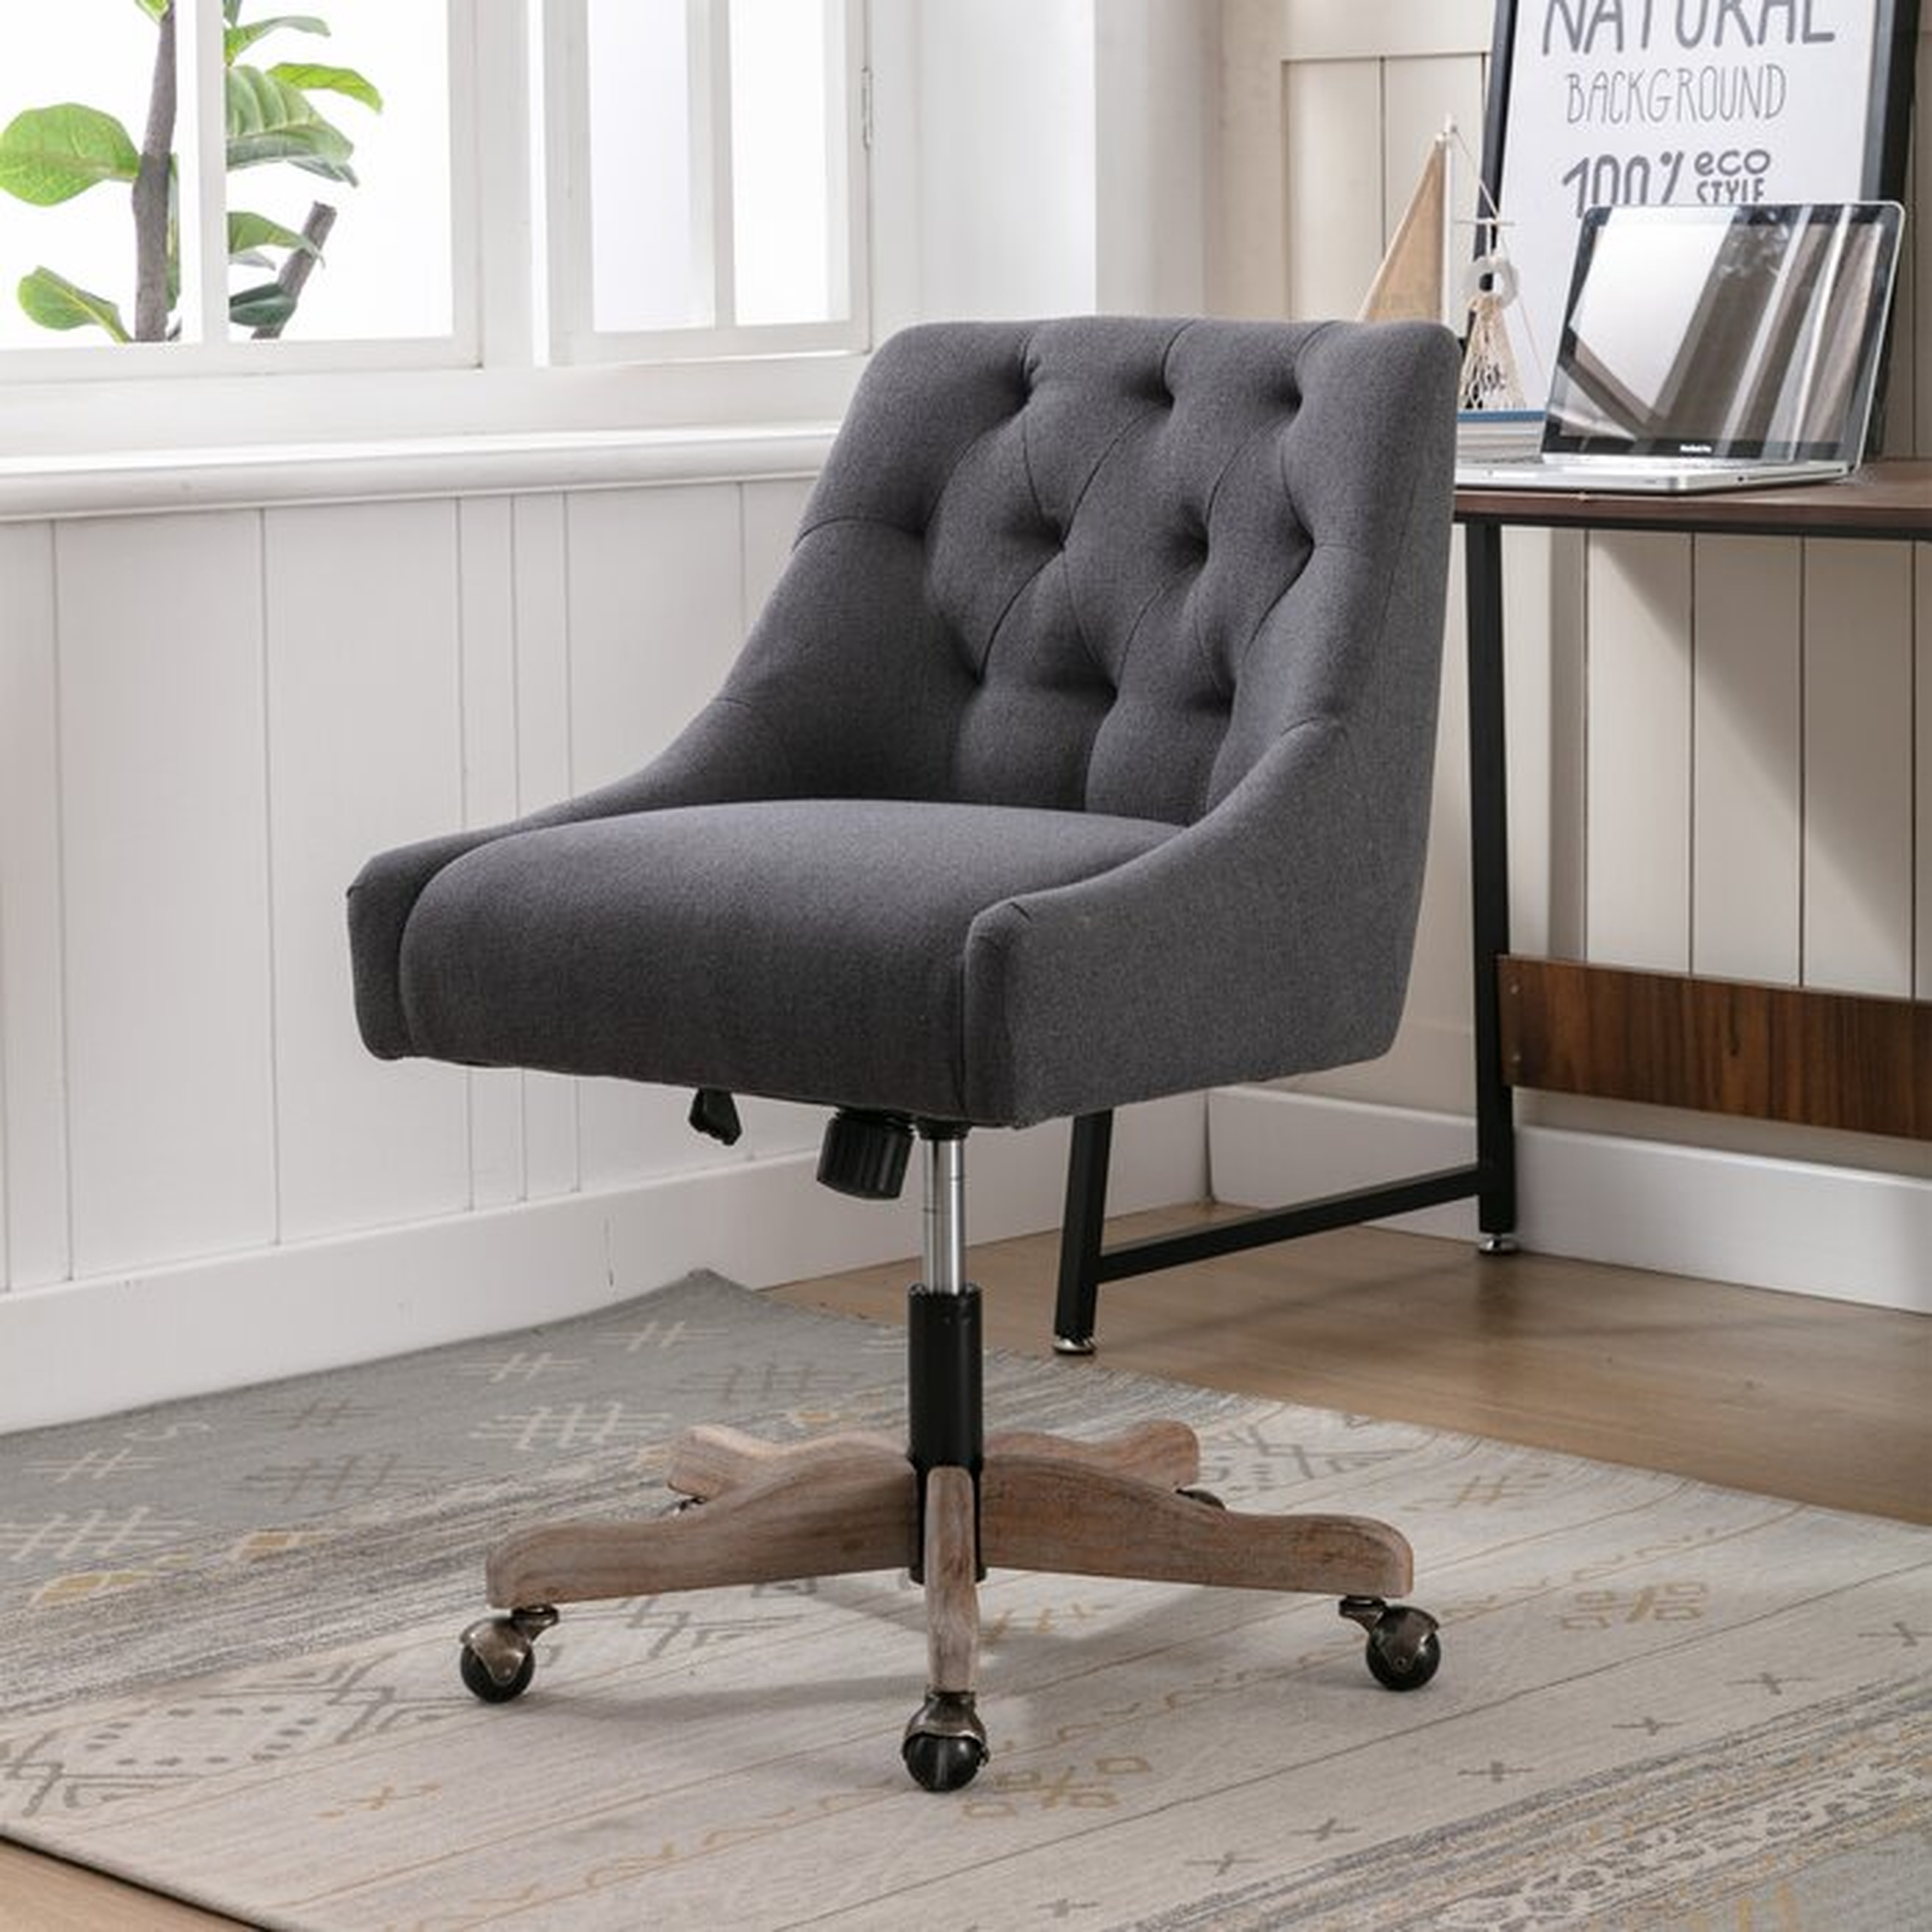 Swivel Shell Chair For Living Room Modern Leisure Office Chair - Wayfair